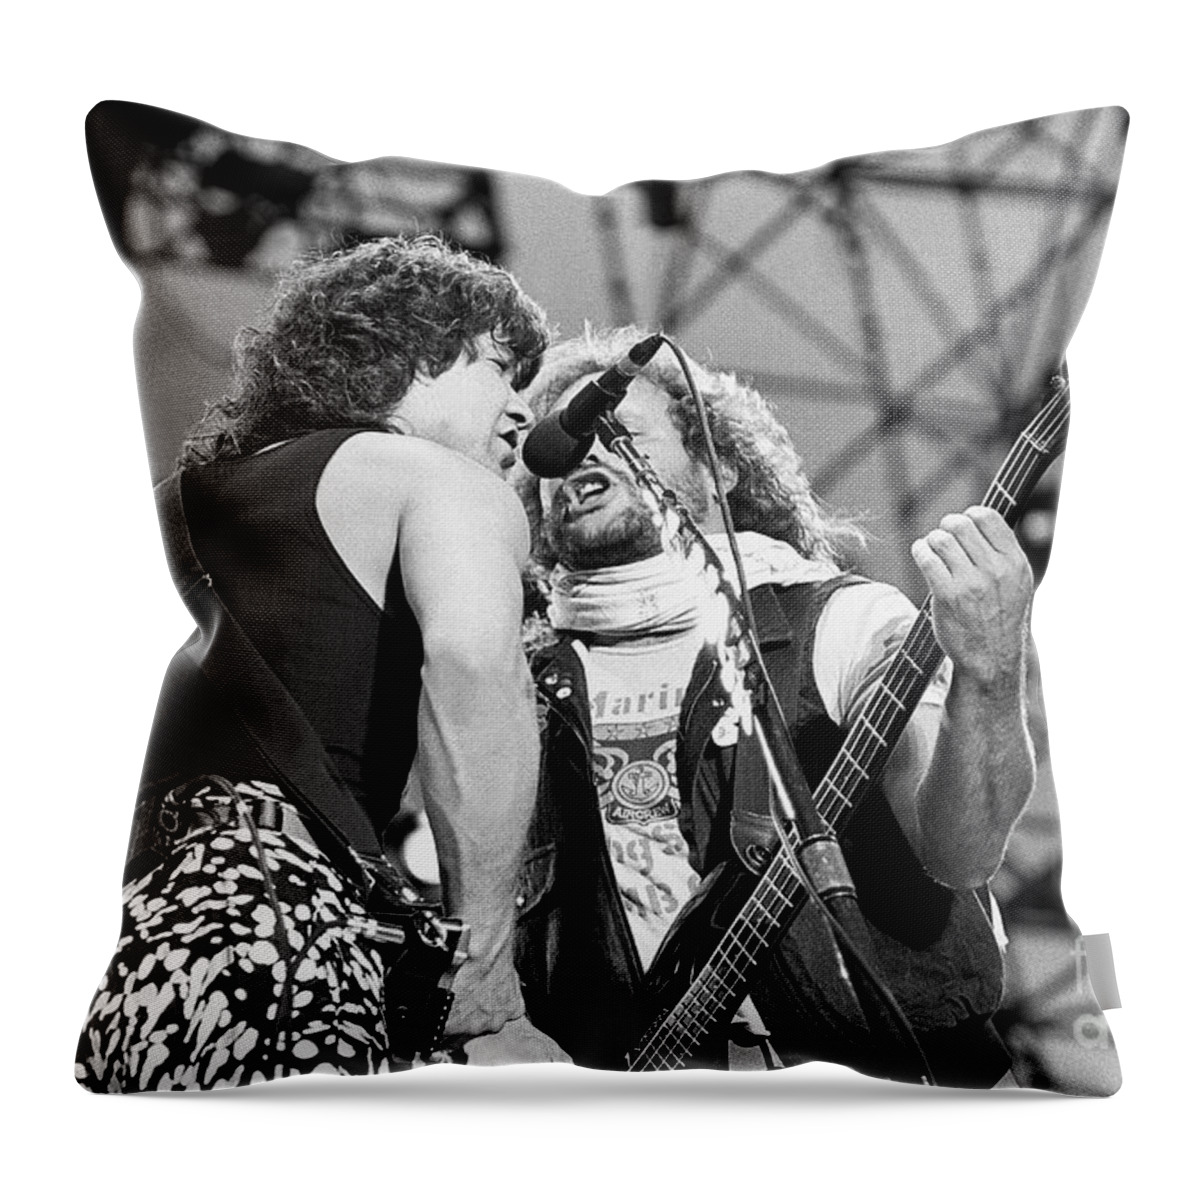 Musician Throw Pillow featuring the photograph Eddie Van Halen and Michael Anthony - Van Halen by Concert Photos